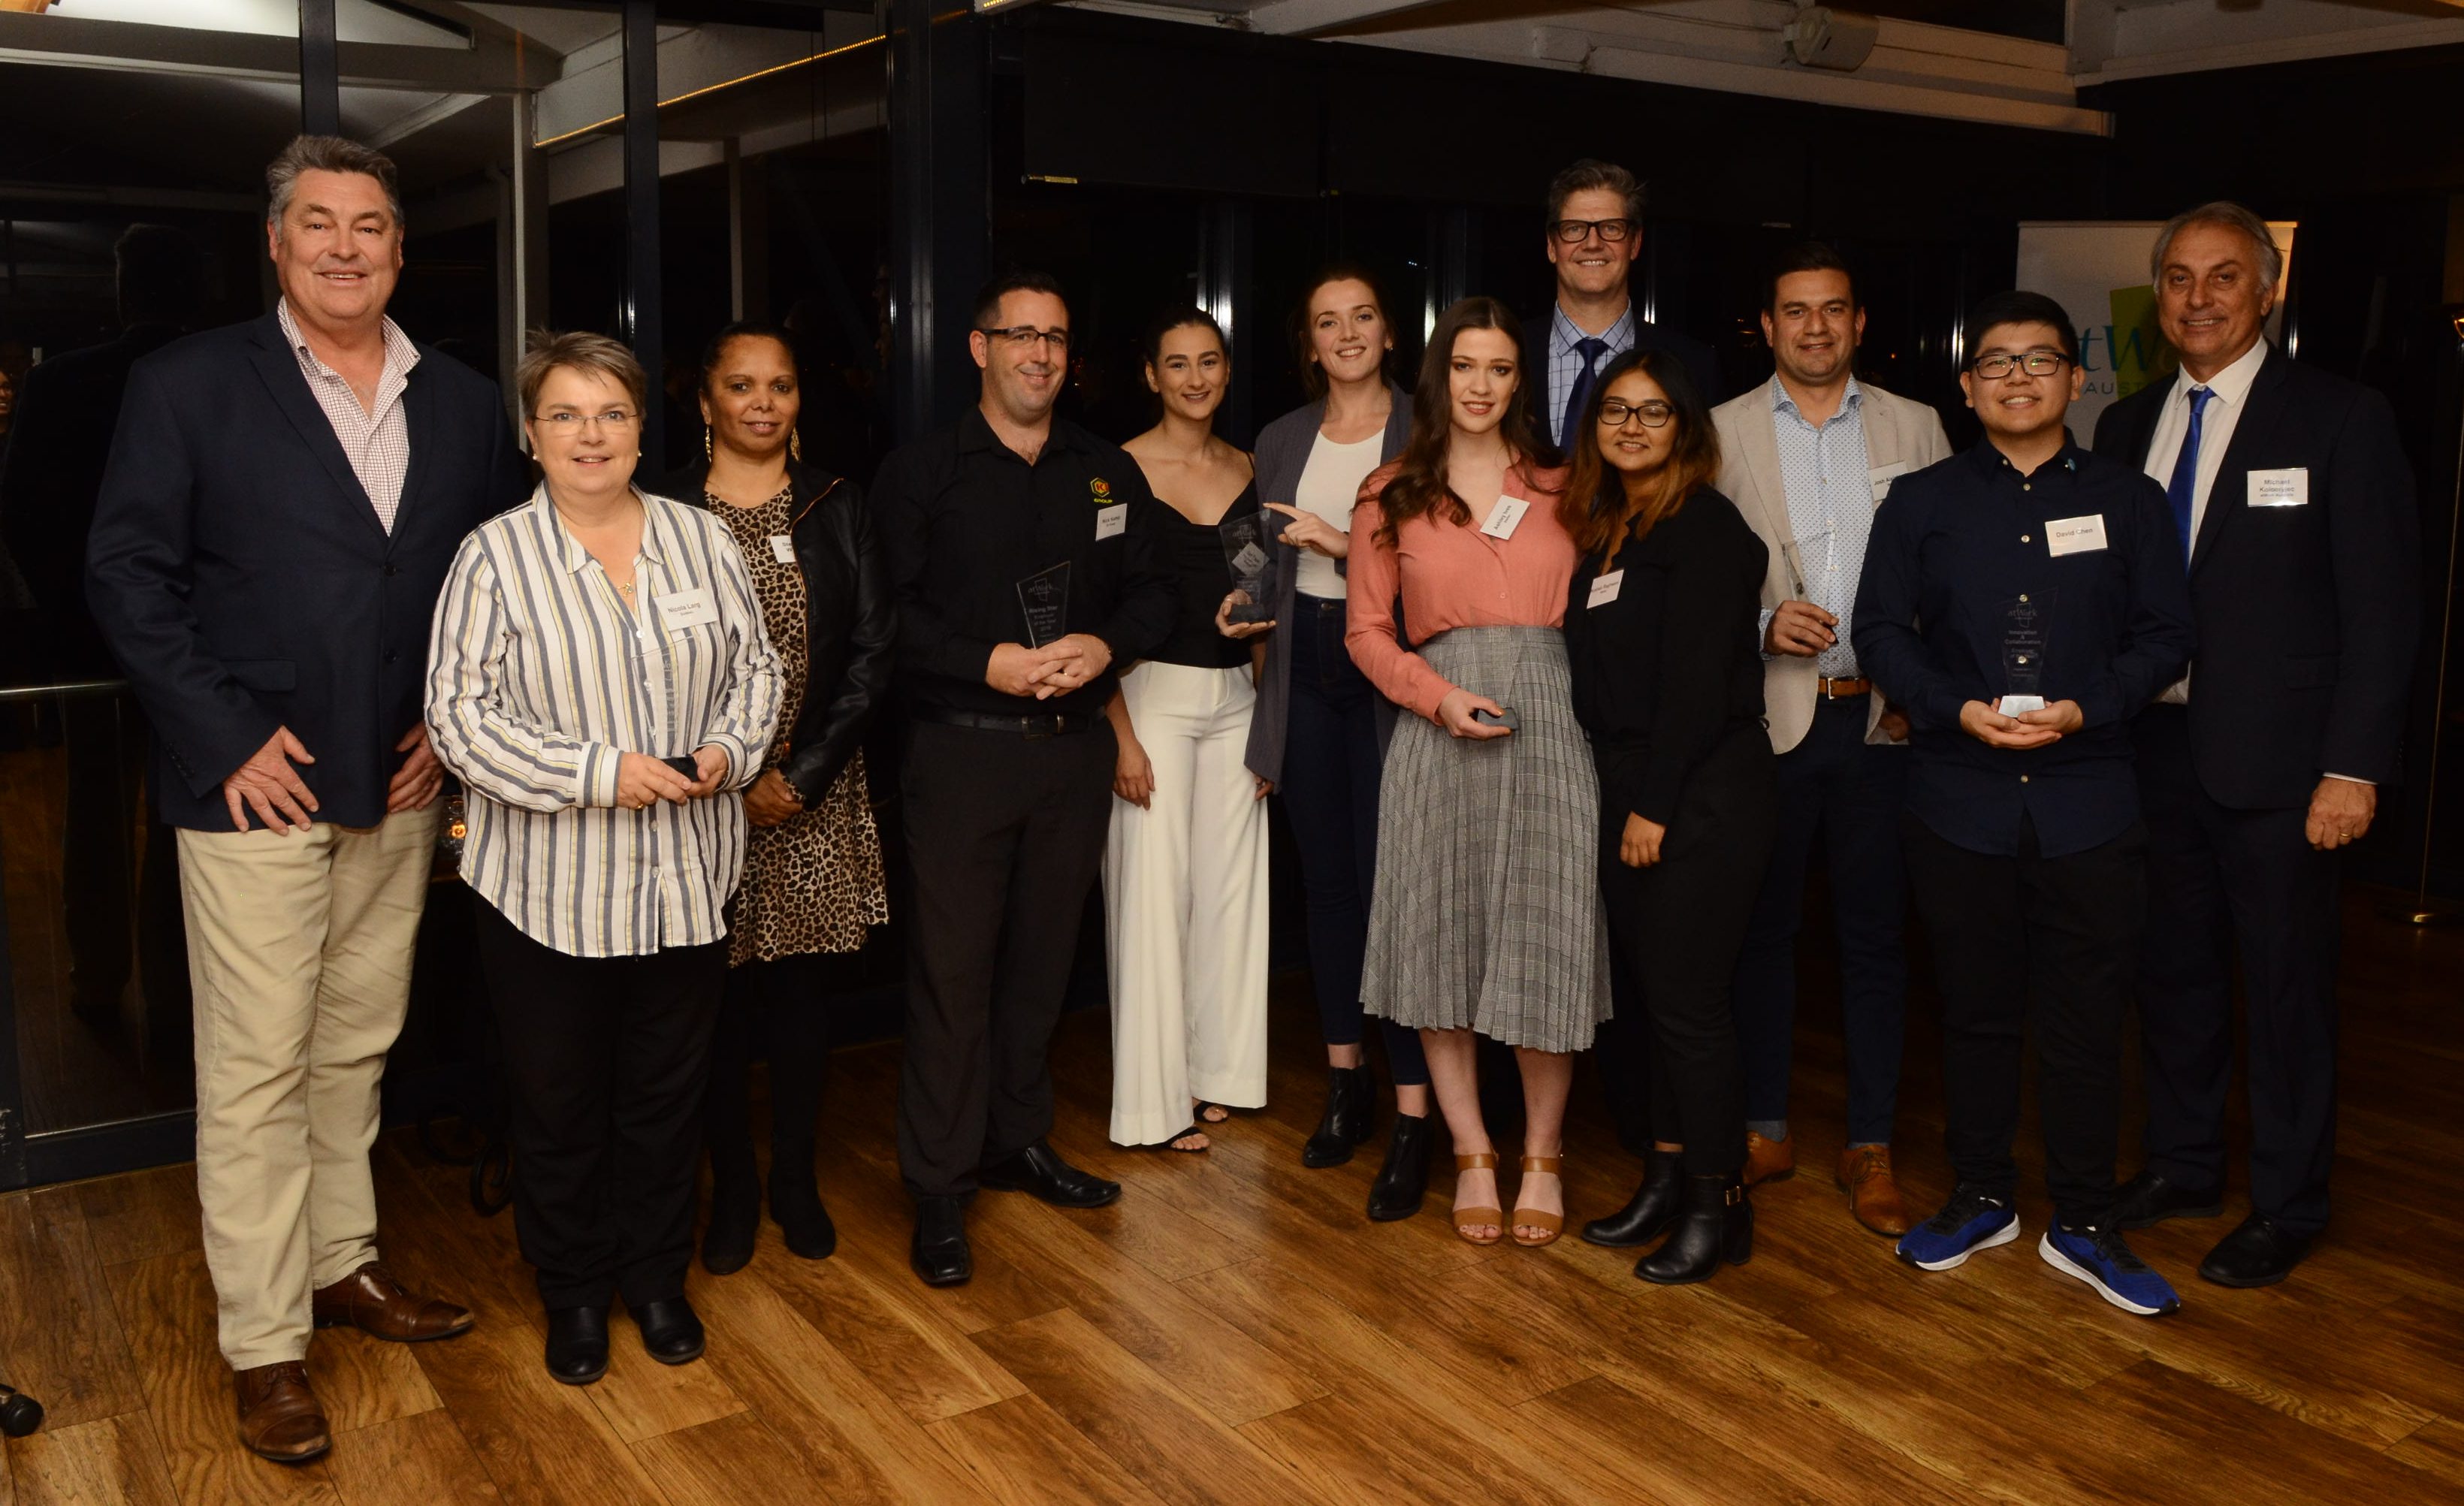 atWork Australia 2019 Employer Award Winners Announced in Perth